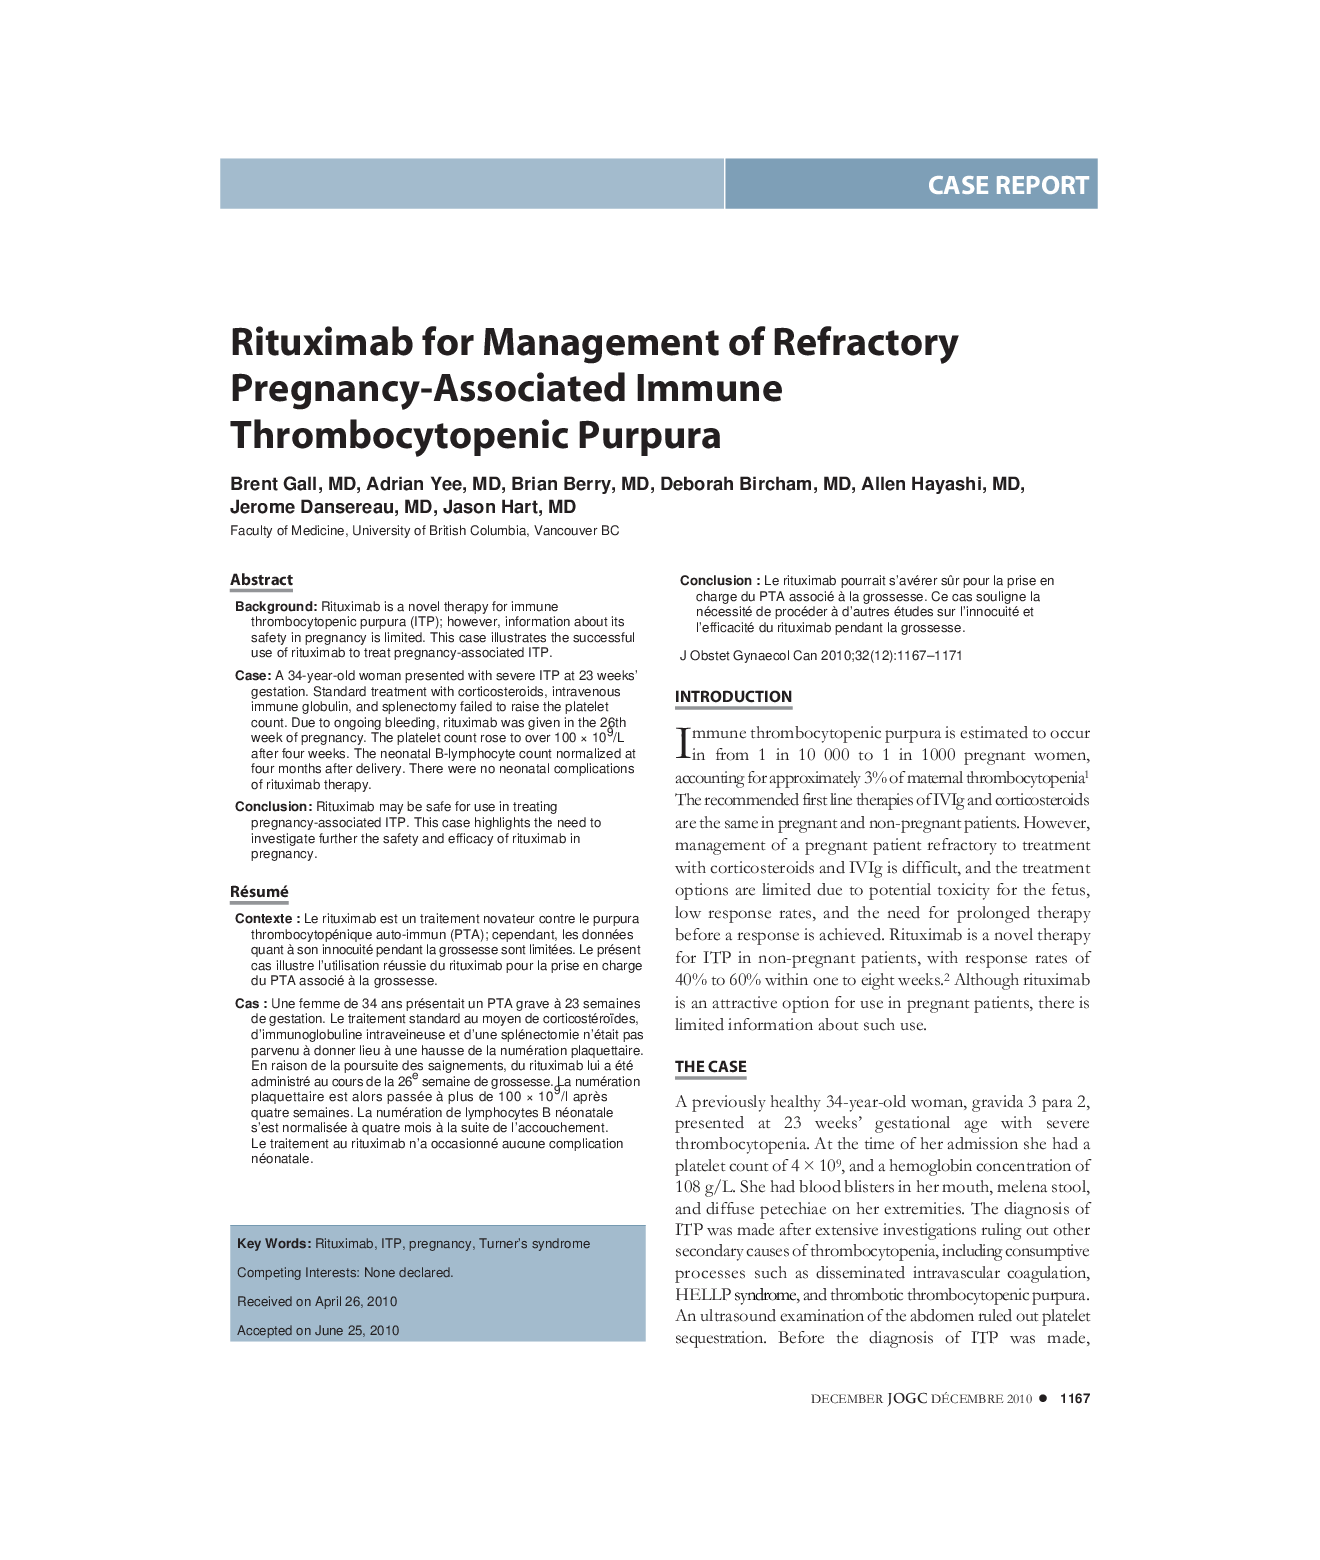 Rituximab for Management of Refractory Pregnancy-Associated Immune Thrombocytopenic Purpura